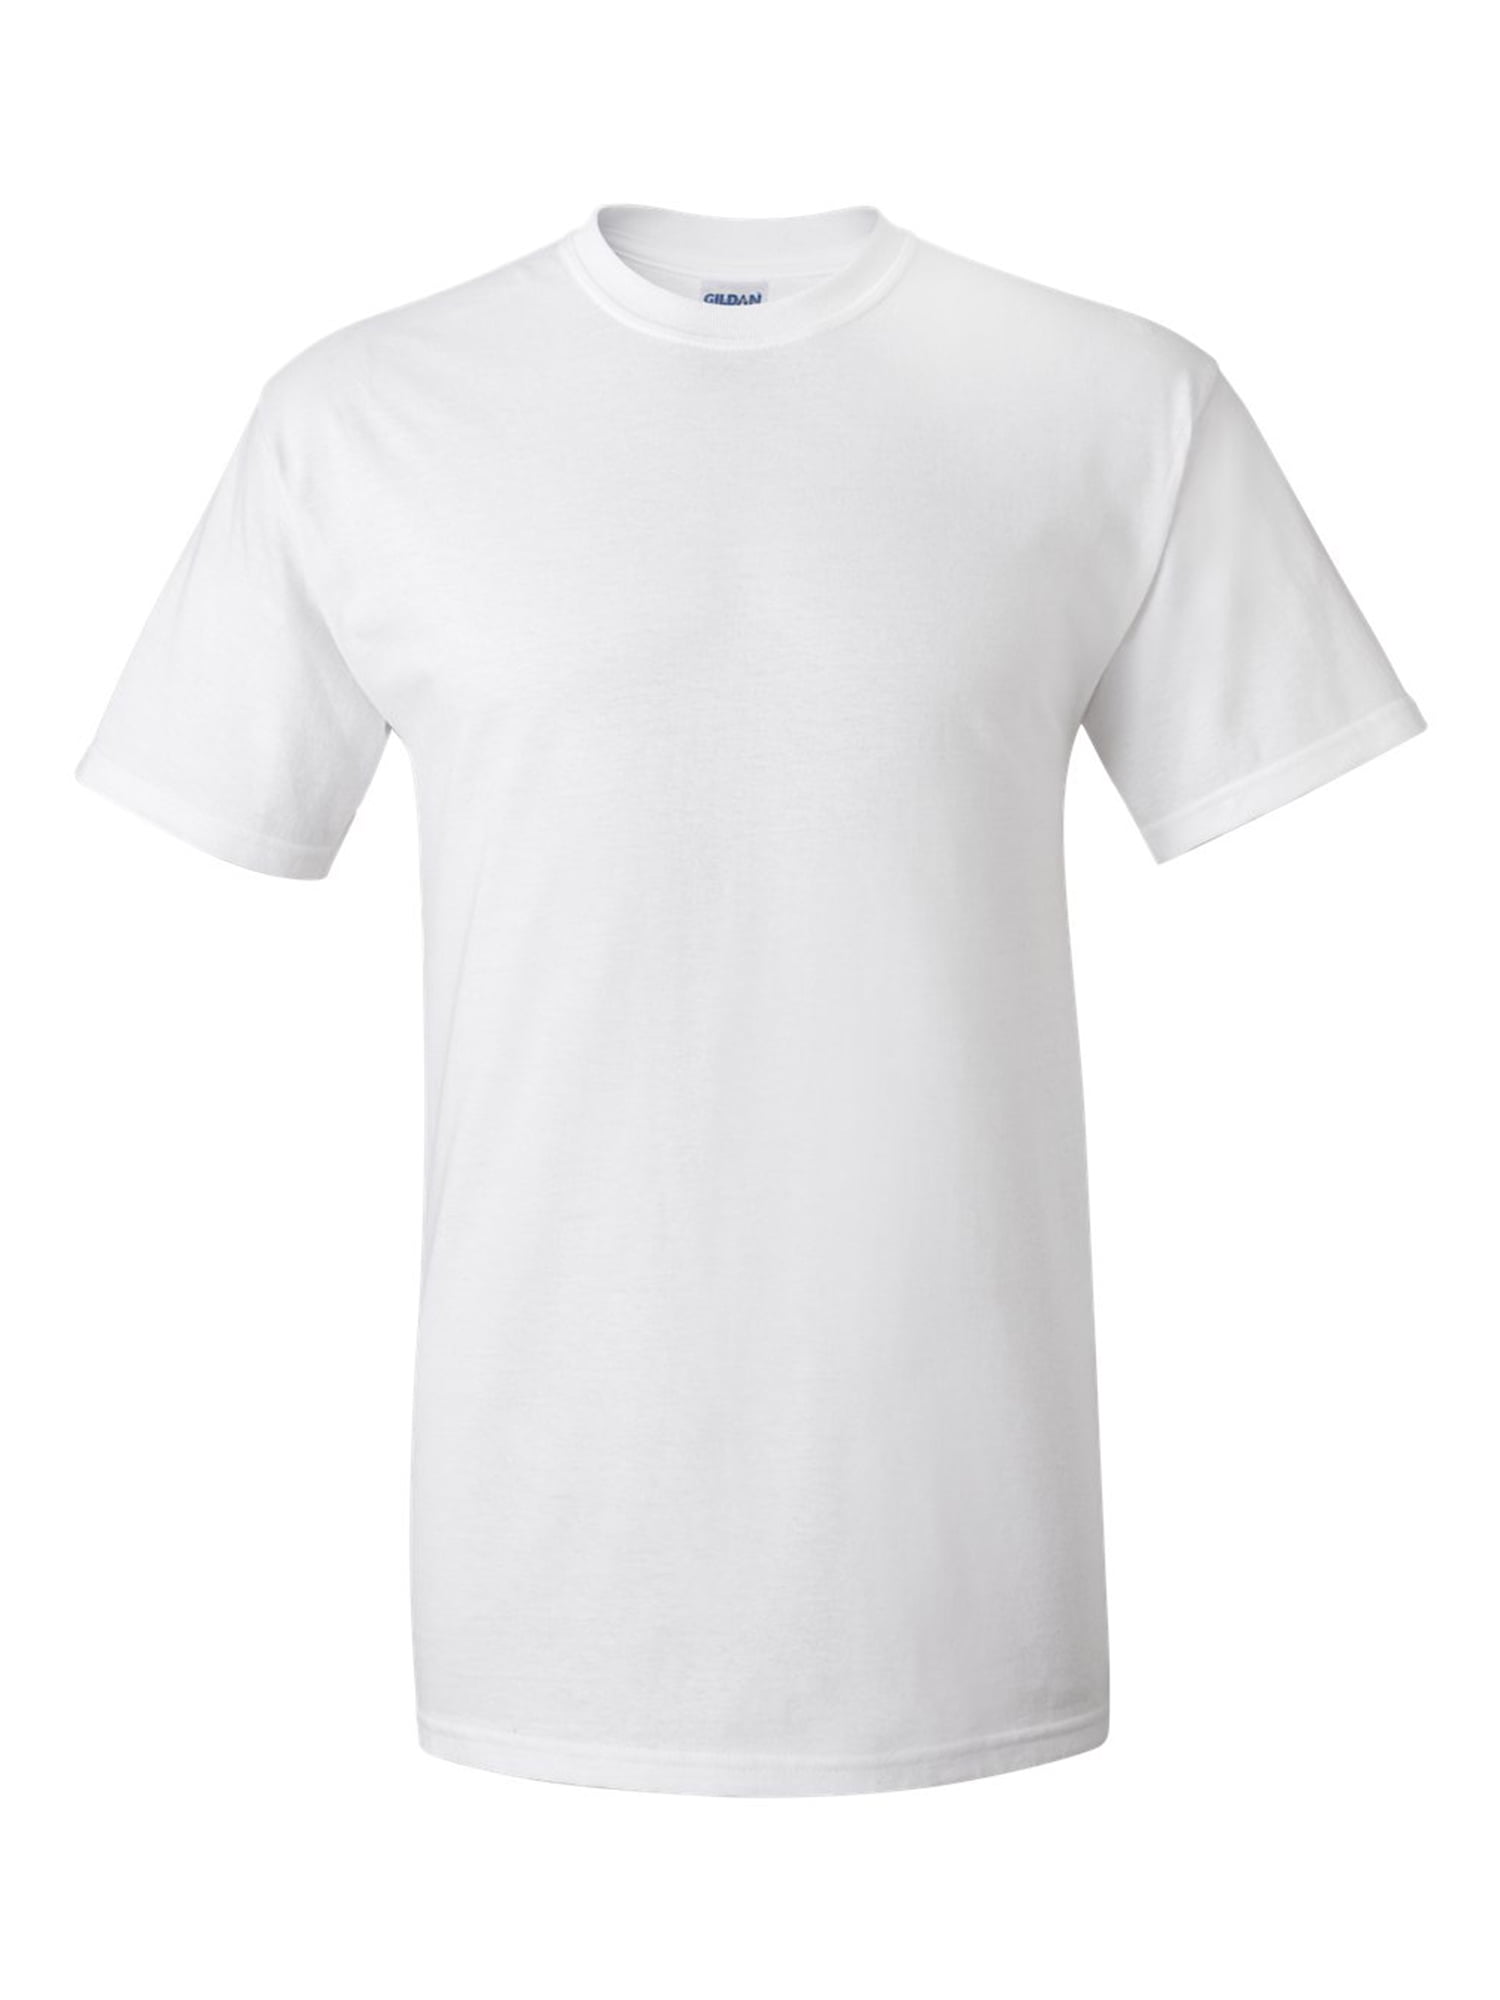 Men T-Shirt Short Sleeve Round Neck Basic Casual 100% Cotton Crew Top S M L XL